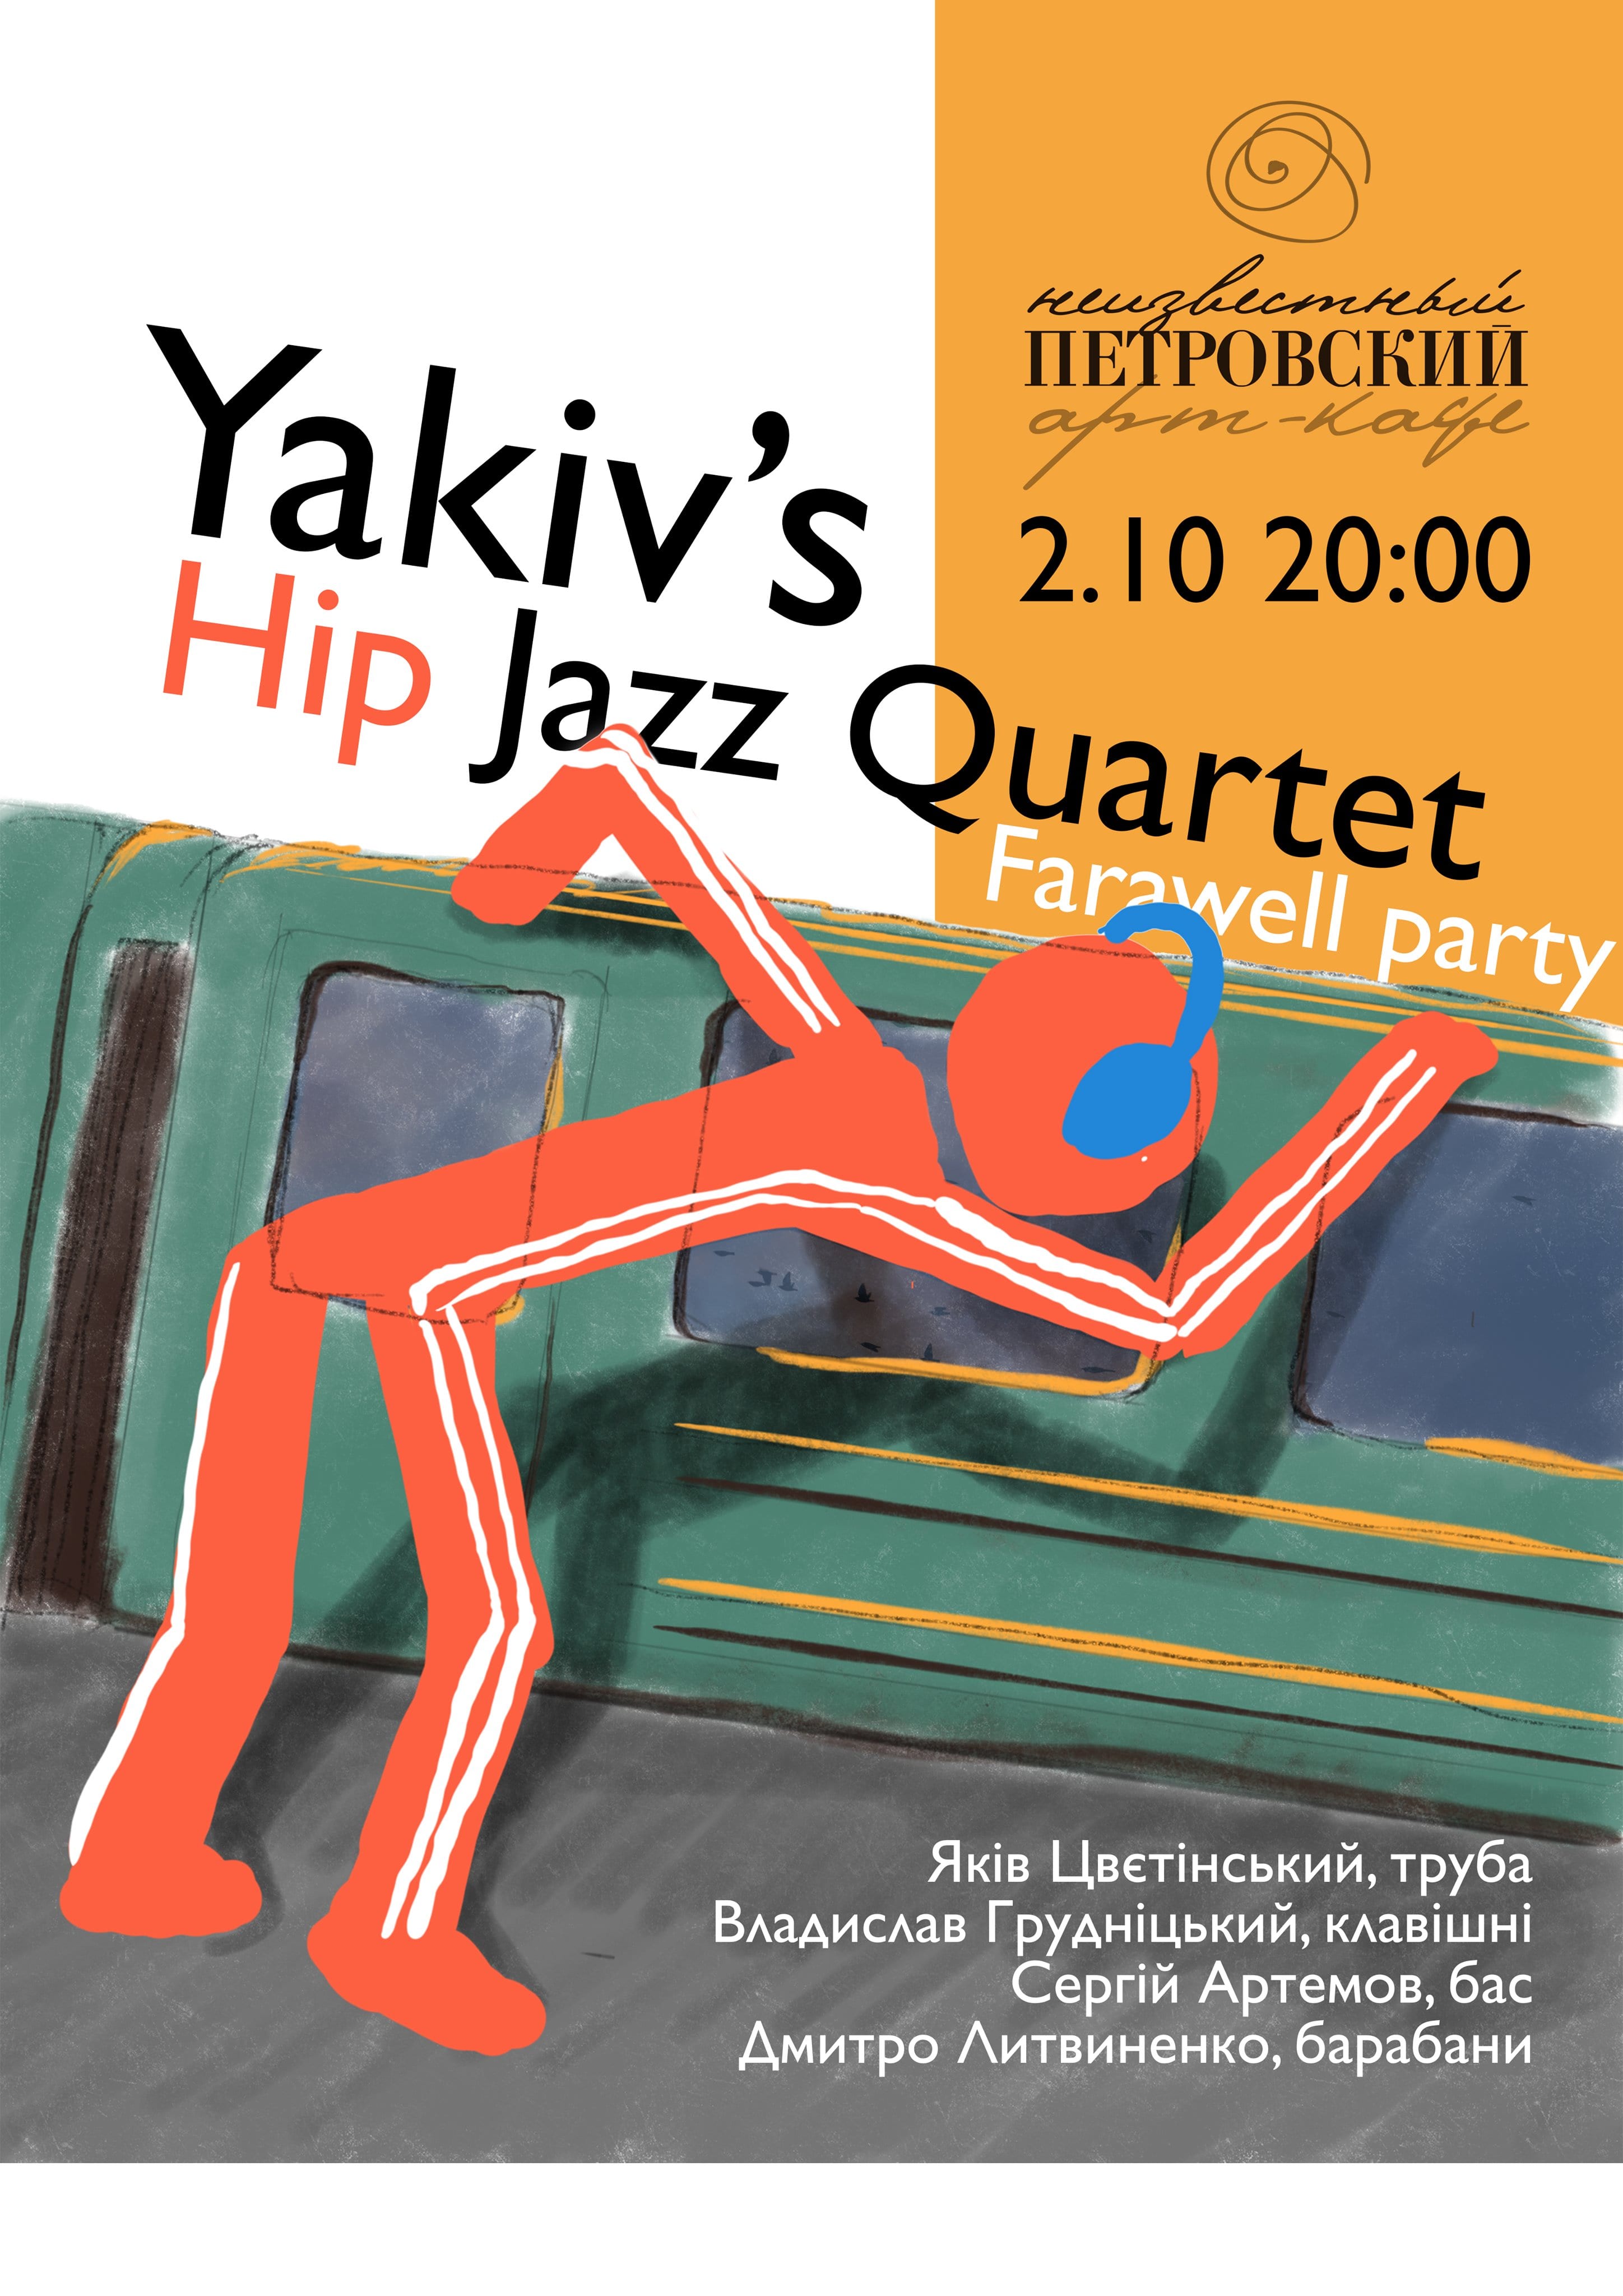 Yakiv’s Hip Jazz Quartet Днепр, 02.10.2020, цена, даты, купить билеты. Афиша Днепра